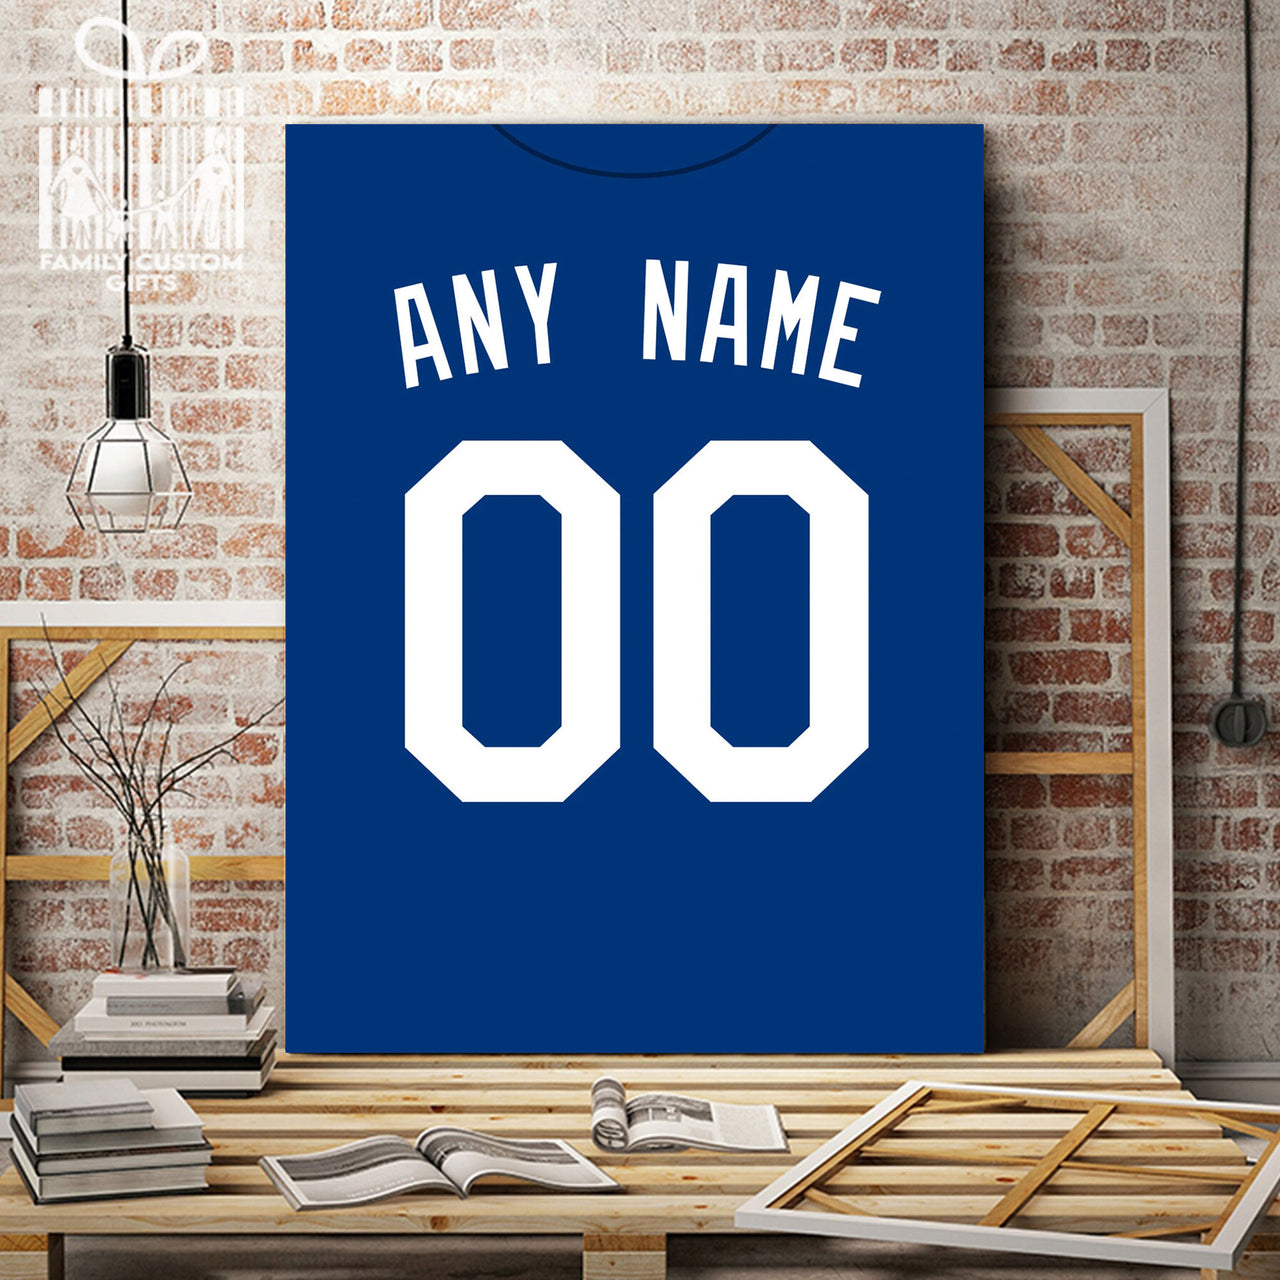 Los Angeles Dodgers Baseball Jersey Custom Number & Name